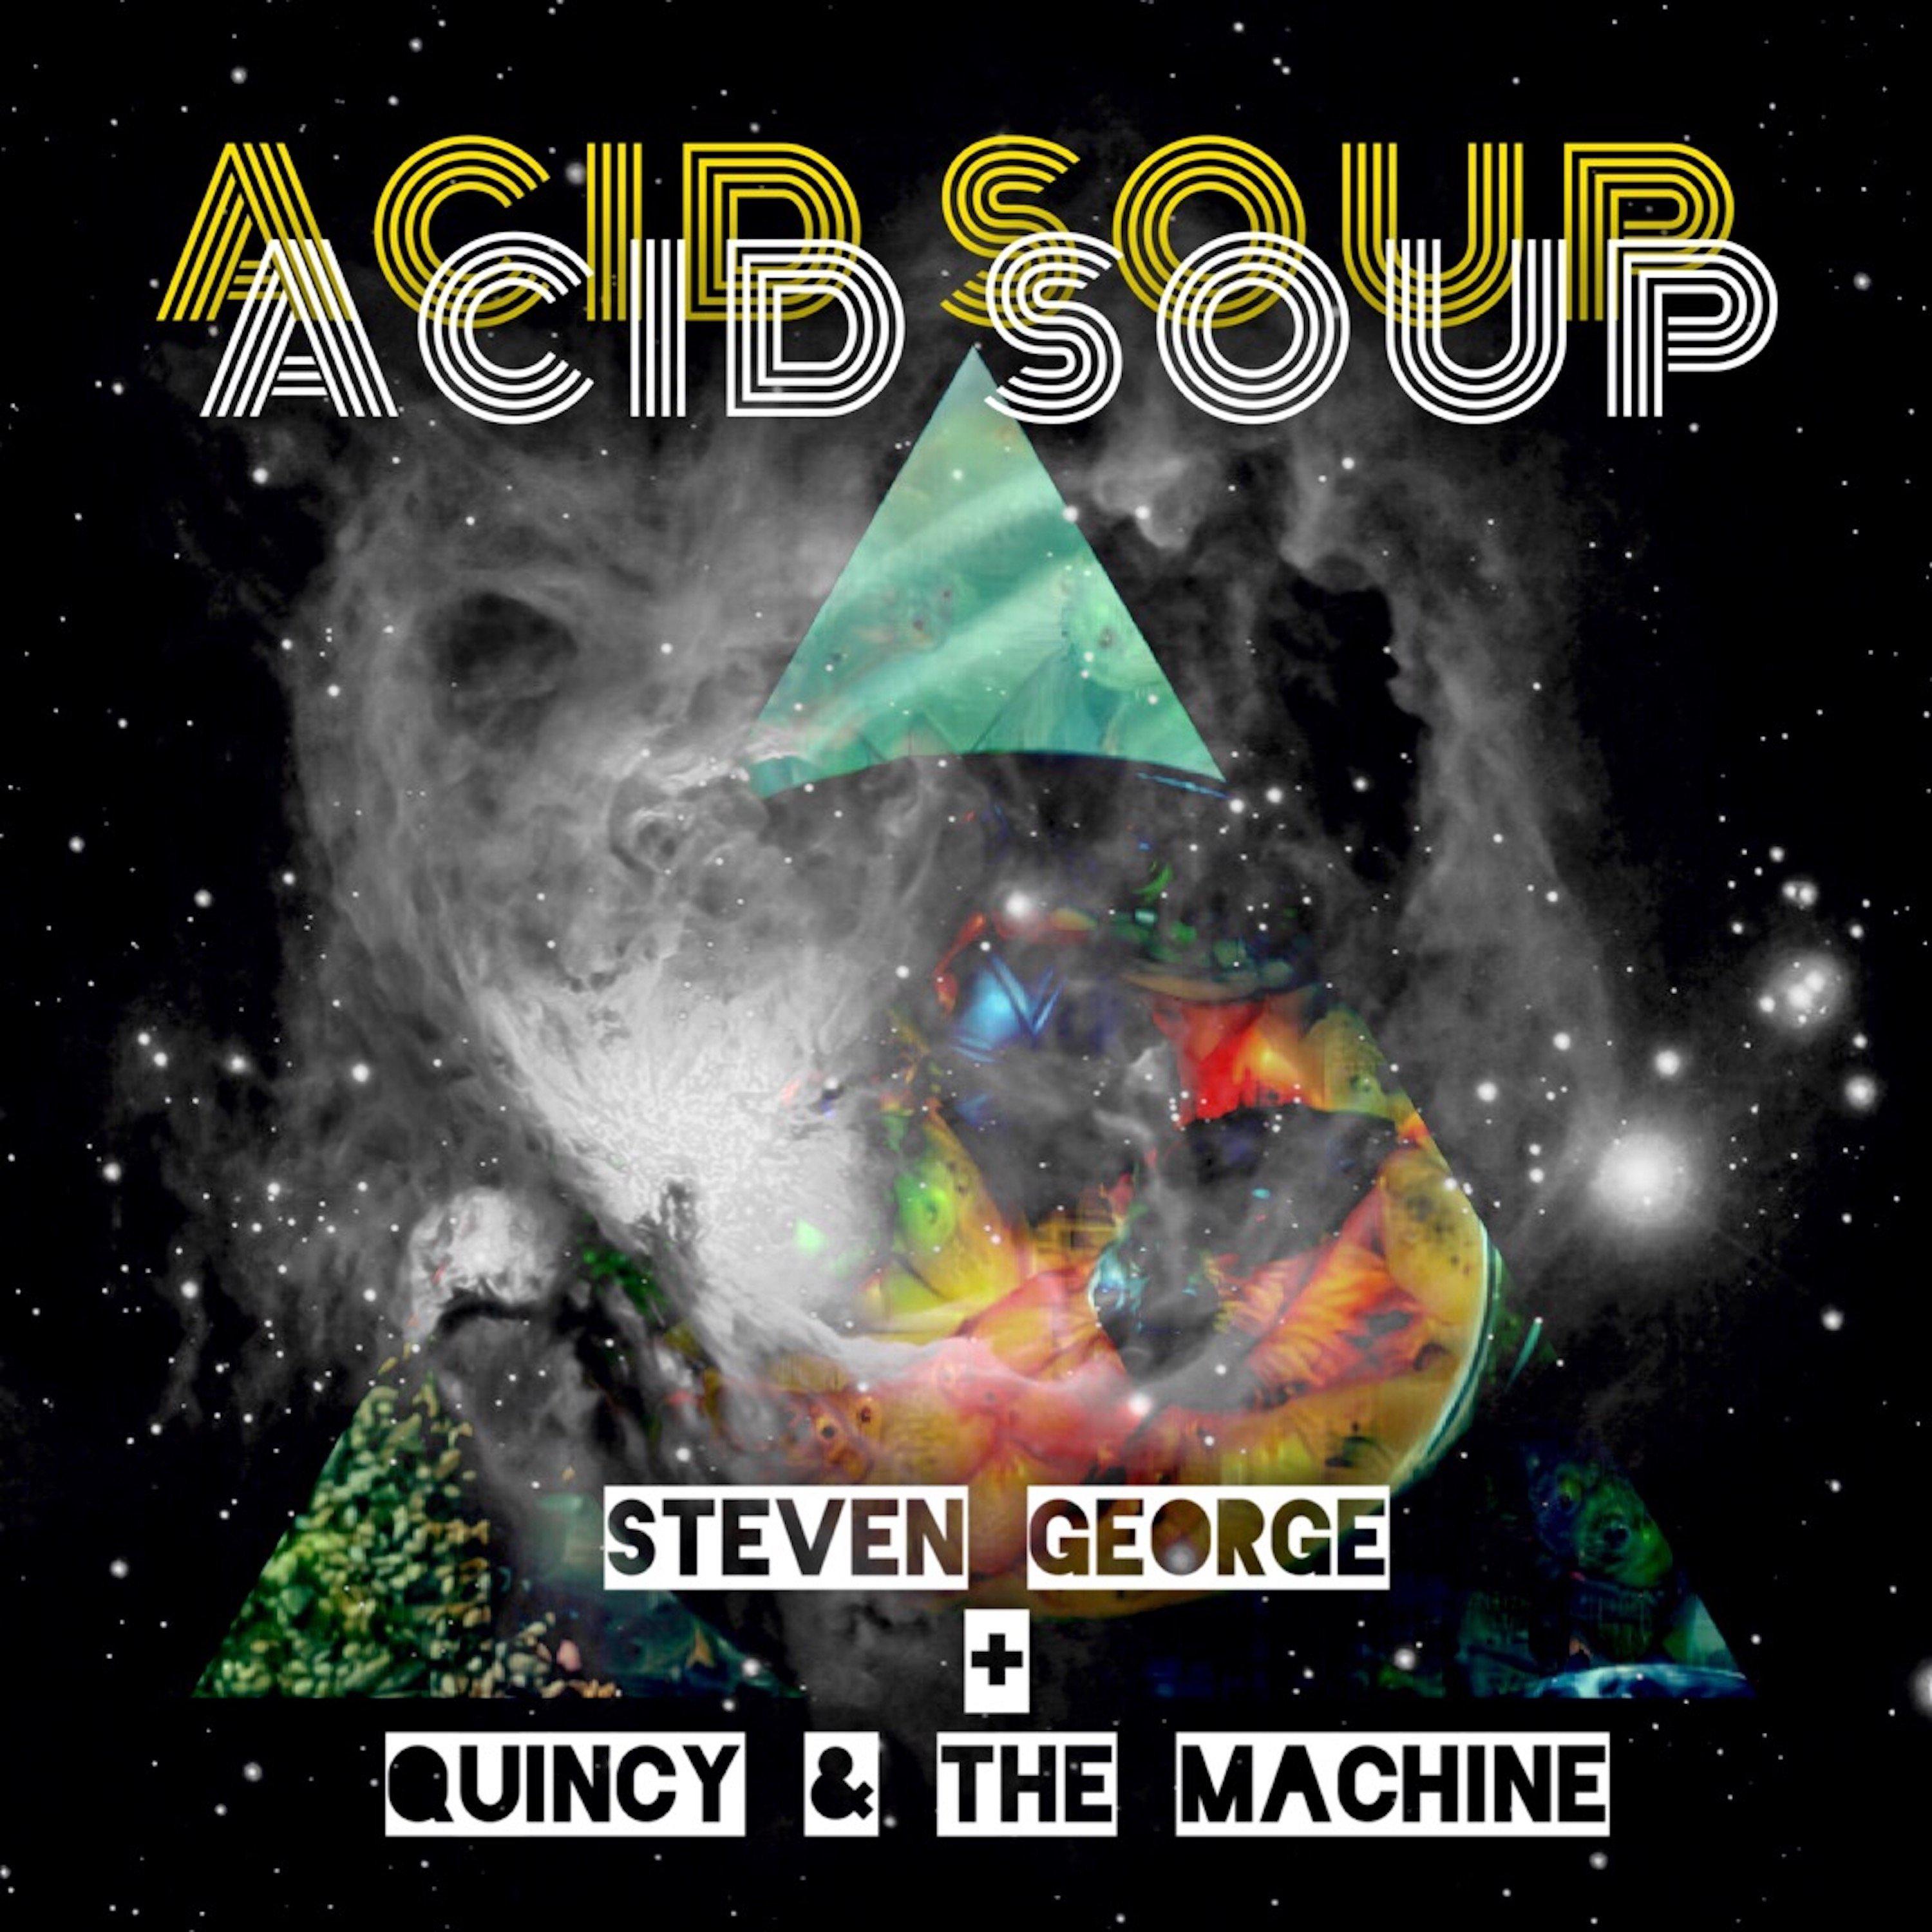 Steven George - Acid Soup (Steven George Mix)